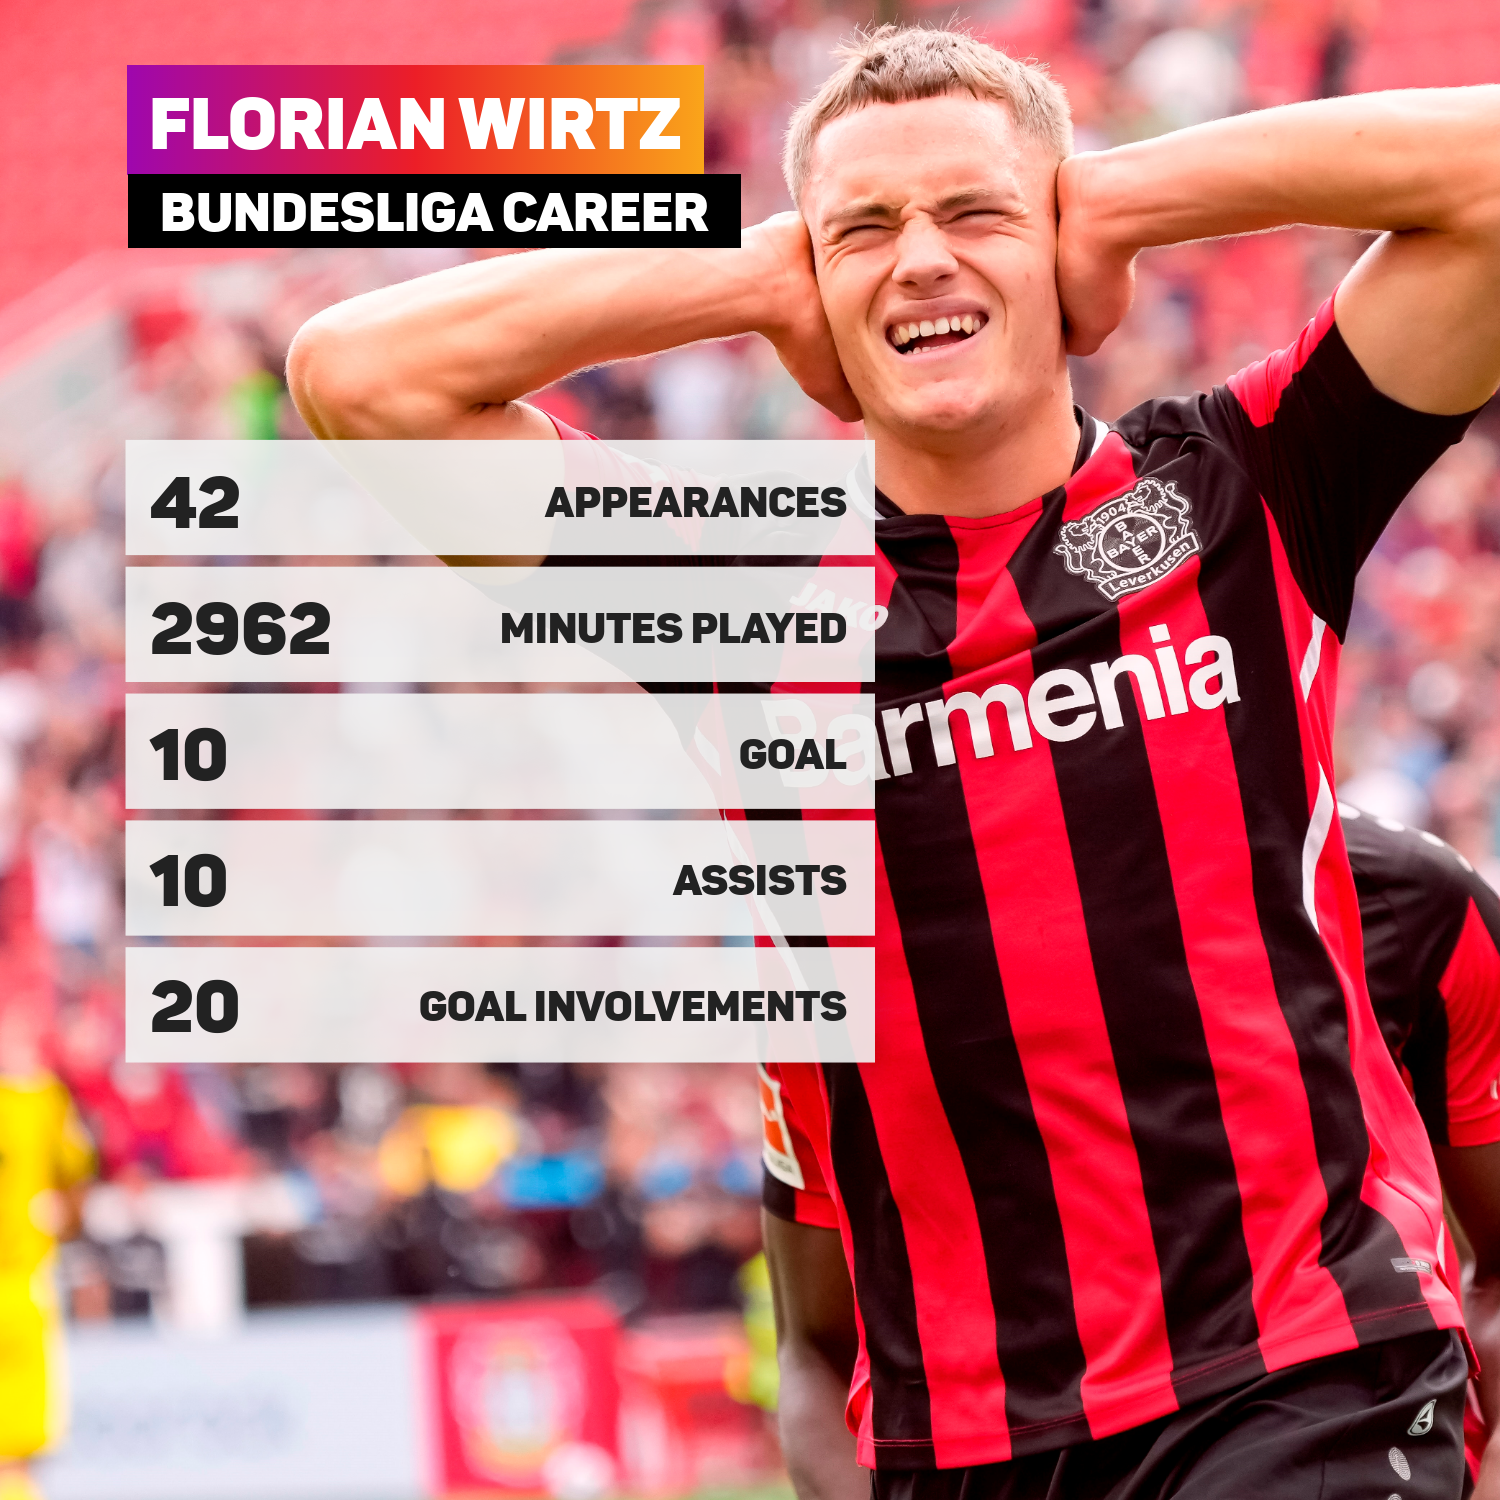 Wirtz's Bundesliga career